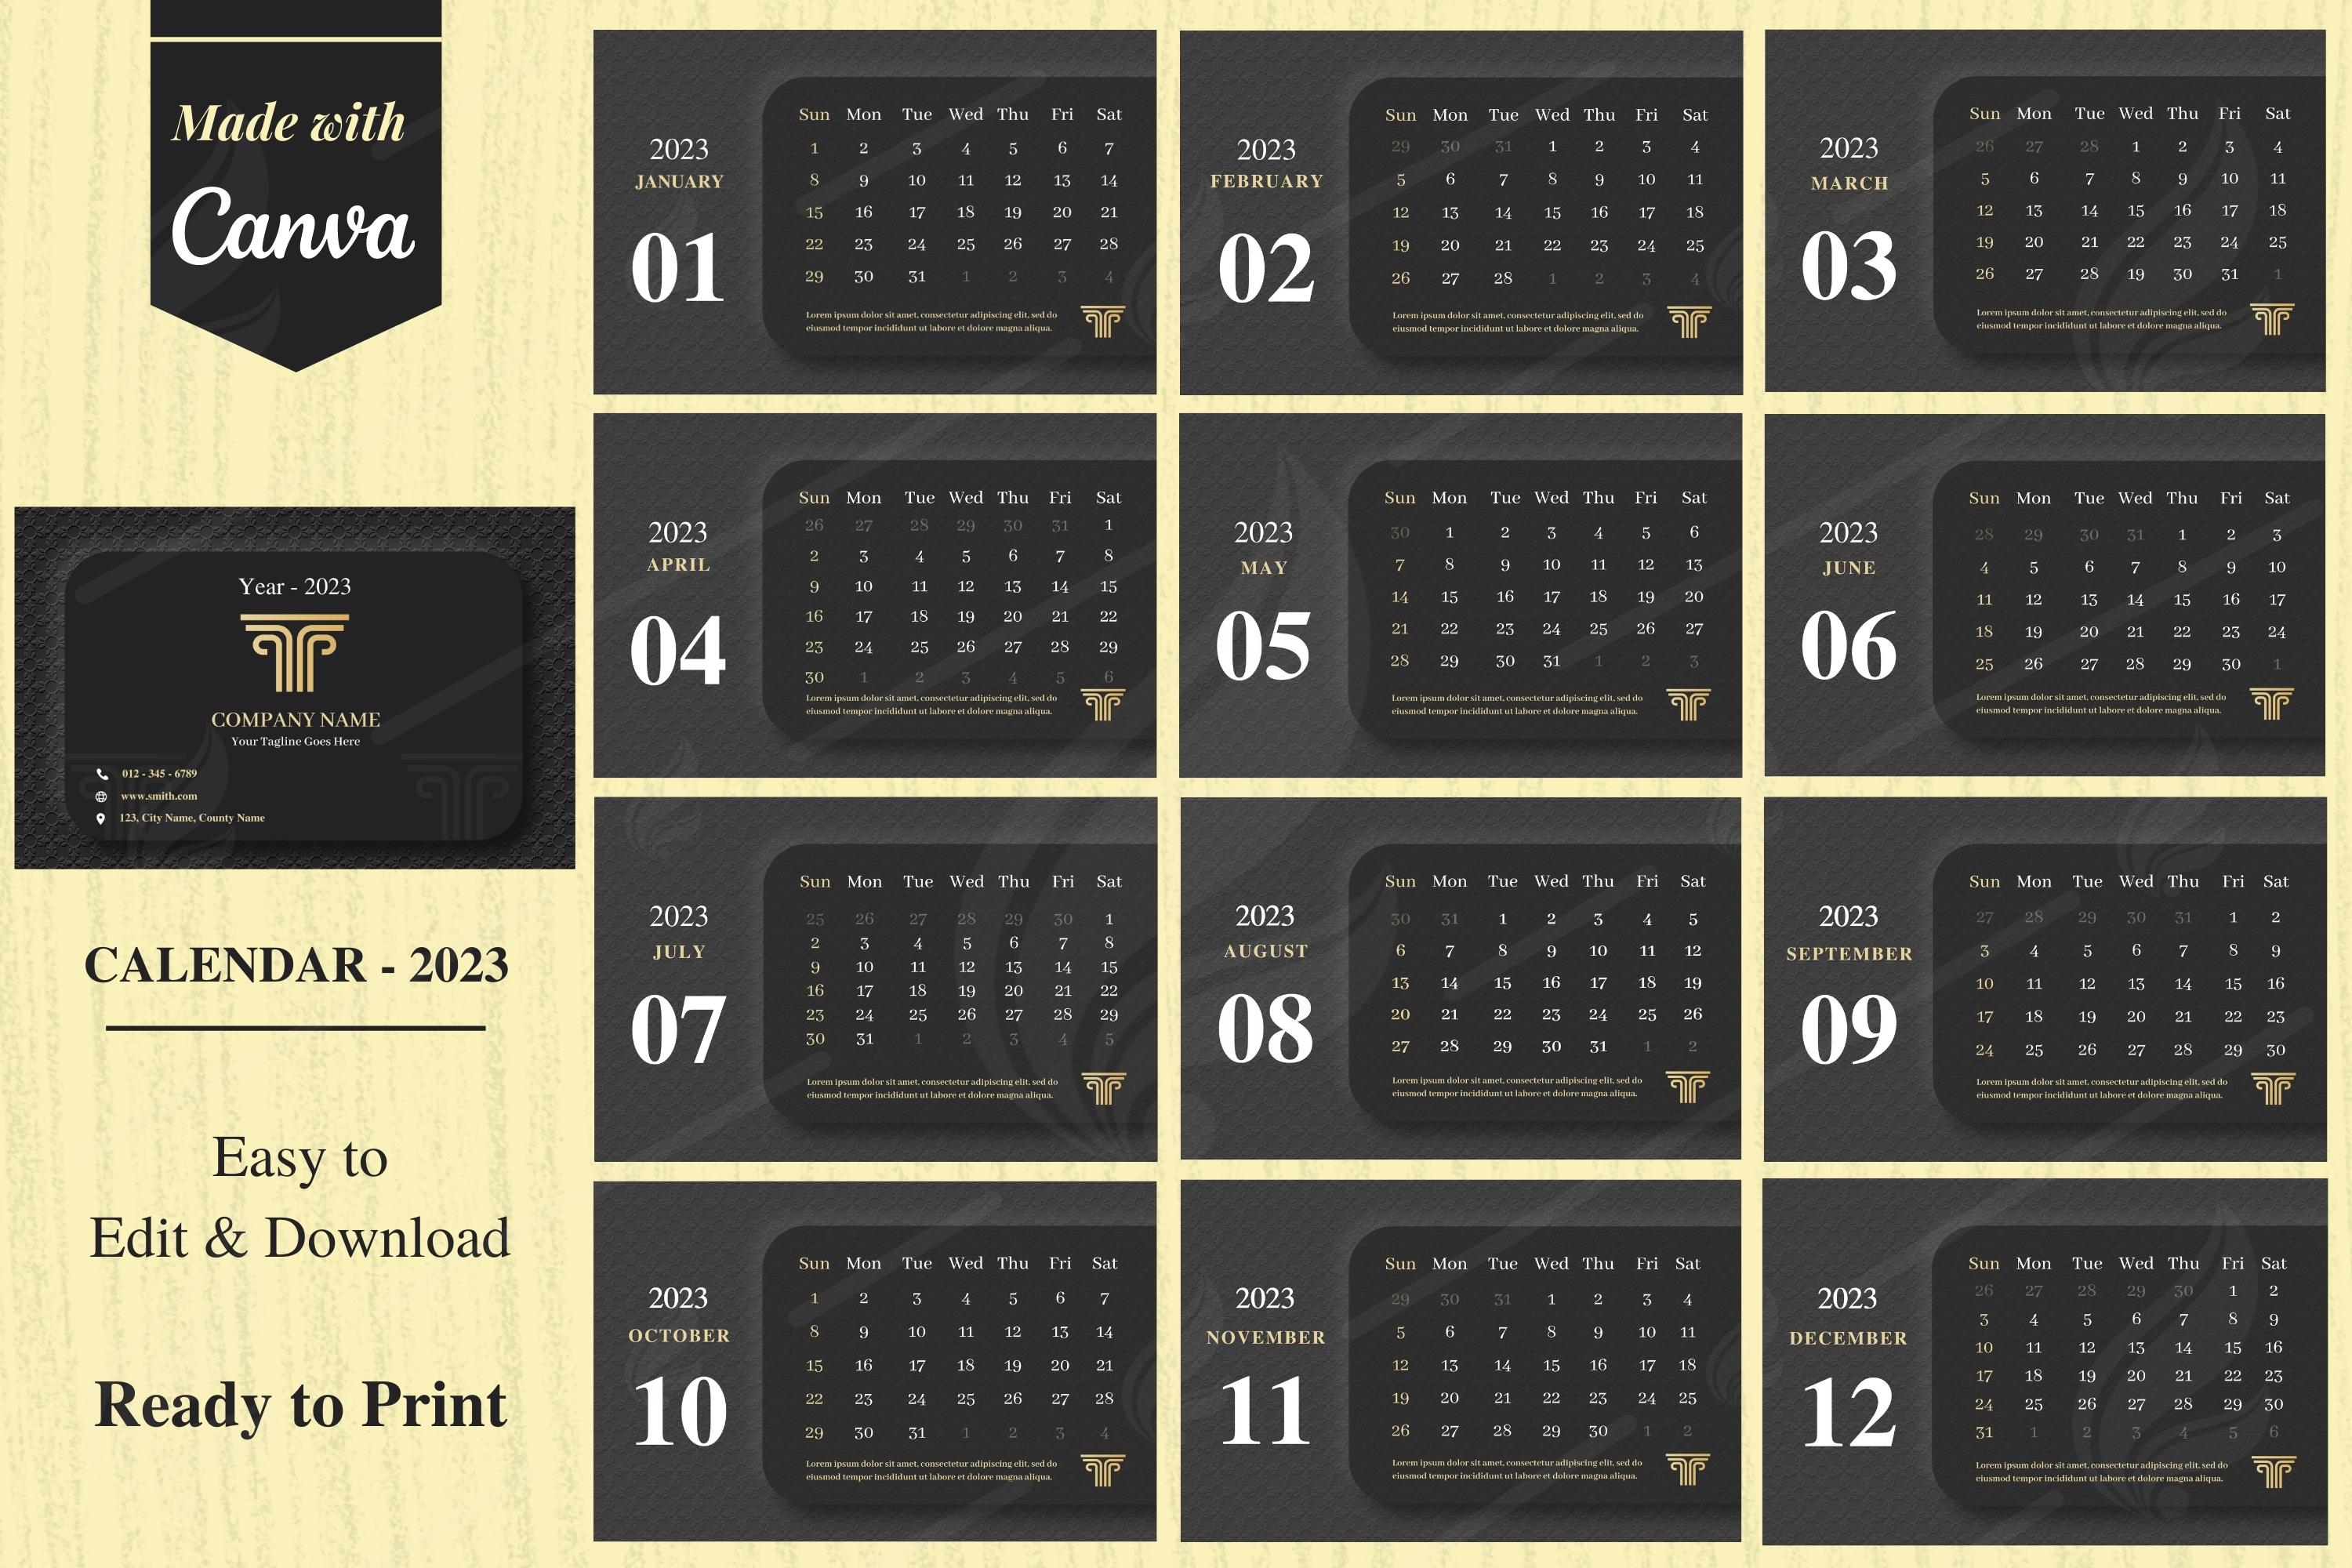 1 901Cover image of Black & Golden Calendar 2023 Template.